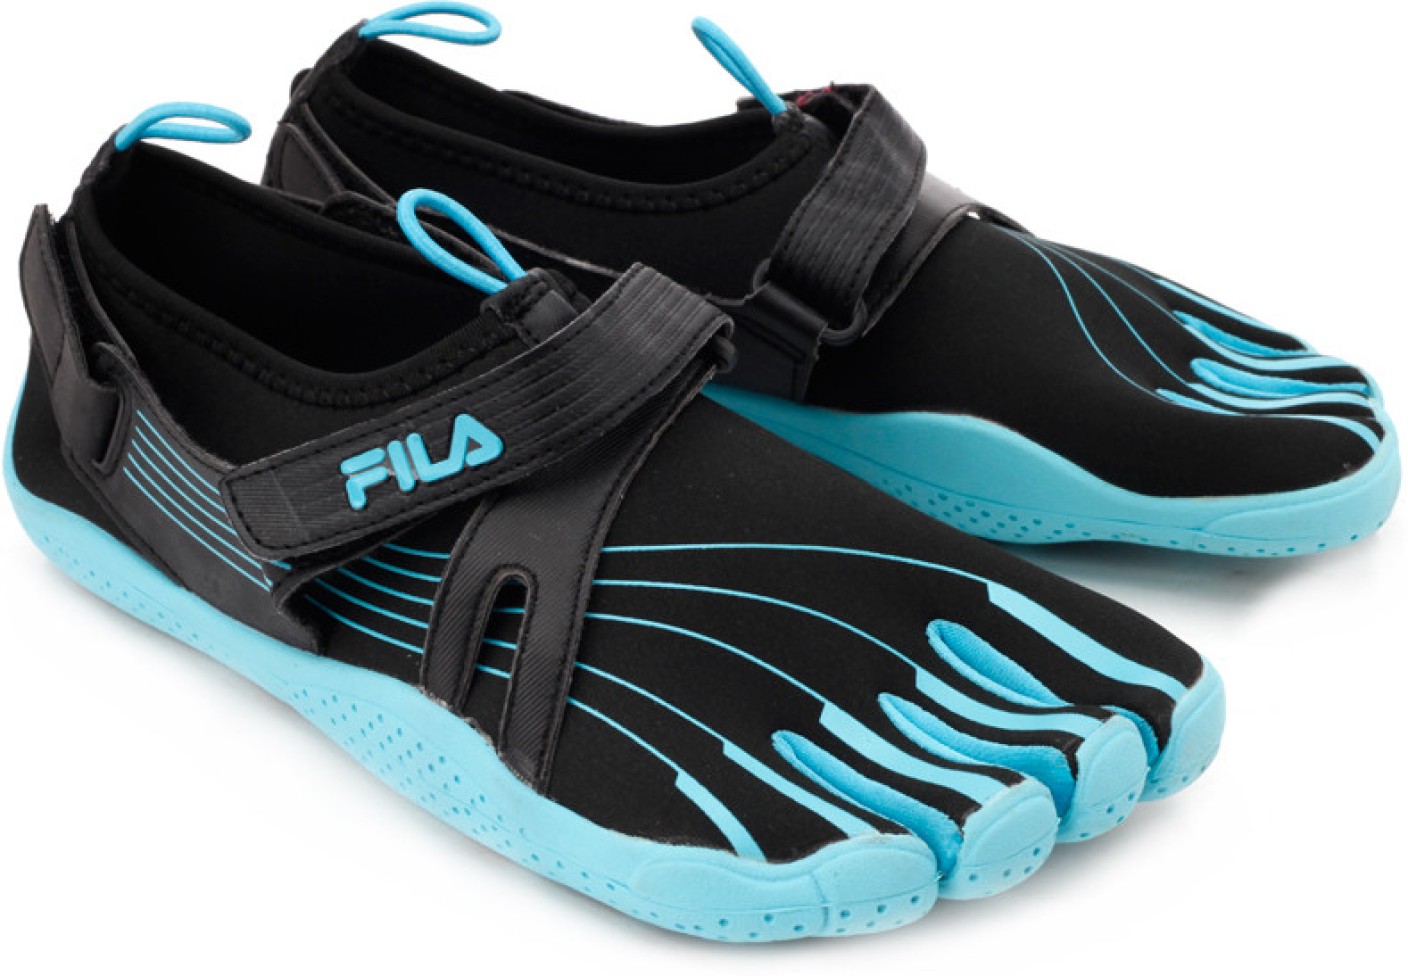 Fila Skeletoes Ez Slide Lifestyle Shoes For Women - Buy Black, Su.Blue ...